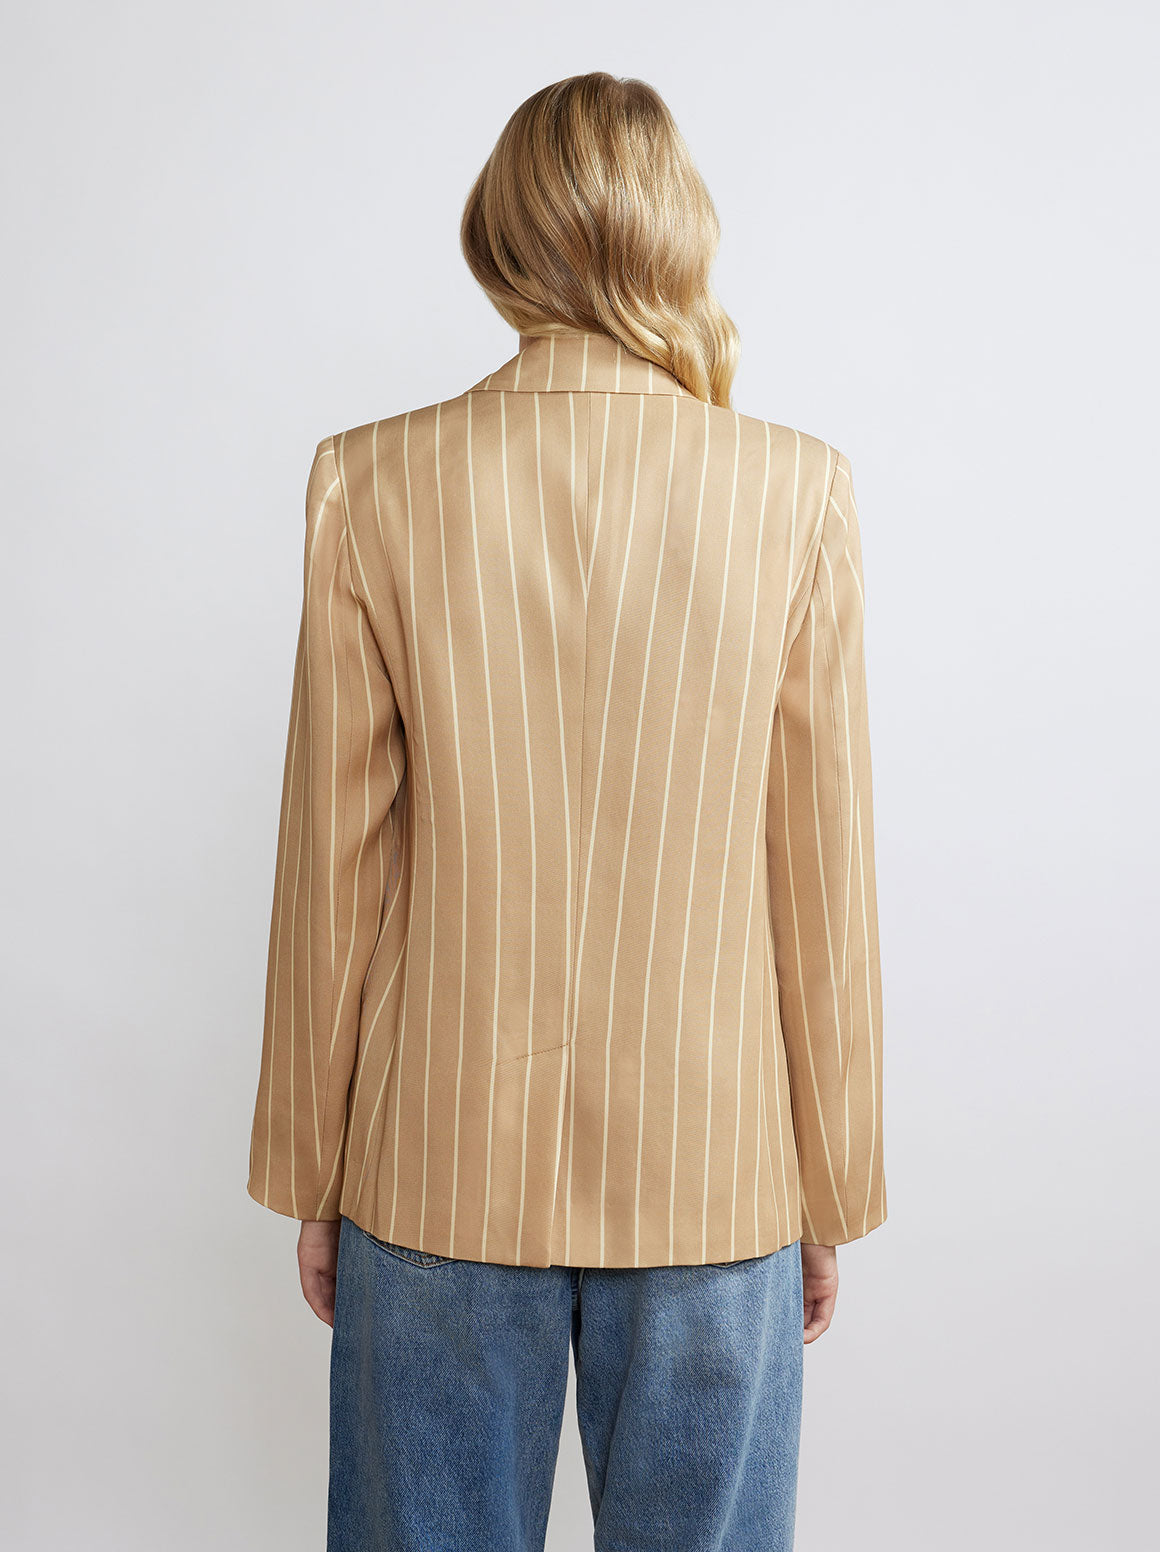 Josephine Camel Stripe Double Breasted Blazer By KITRI Studio